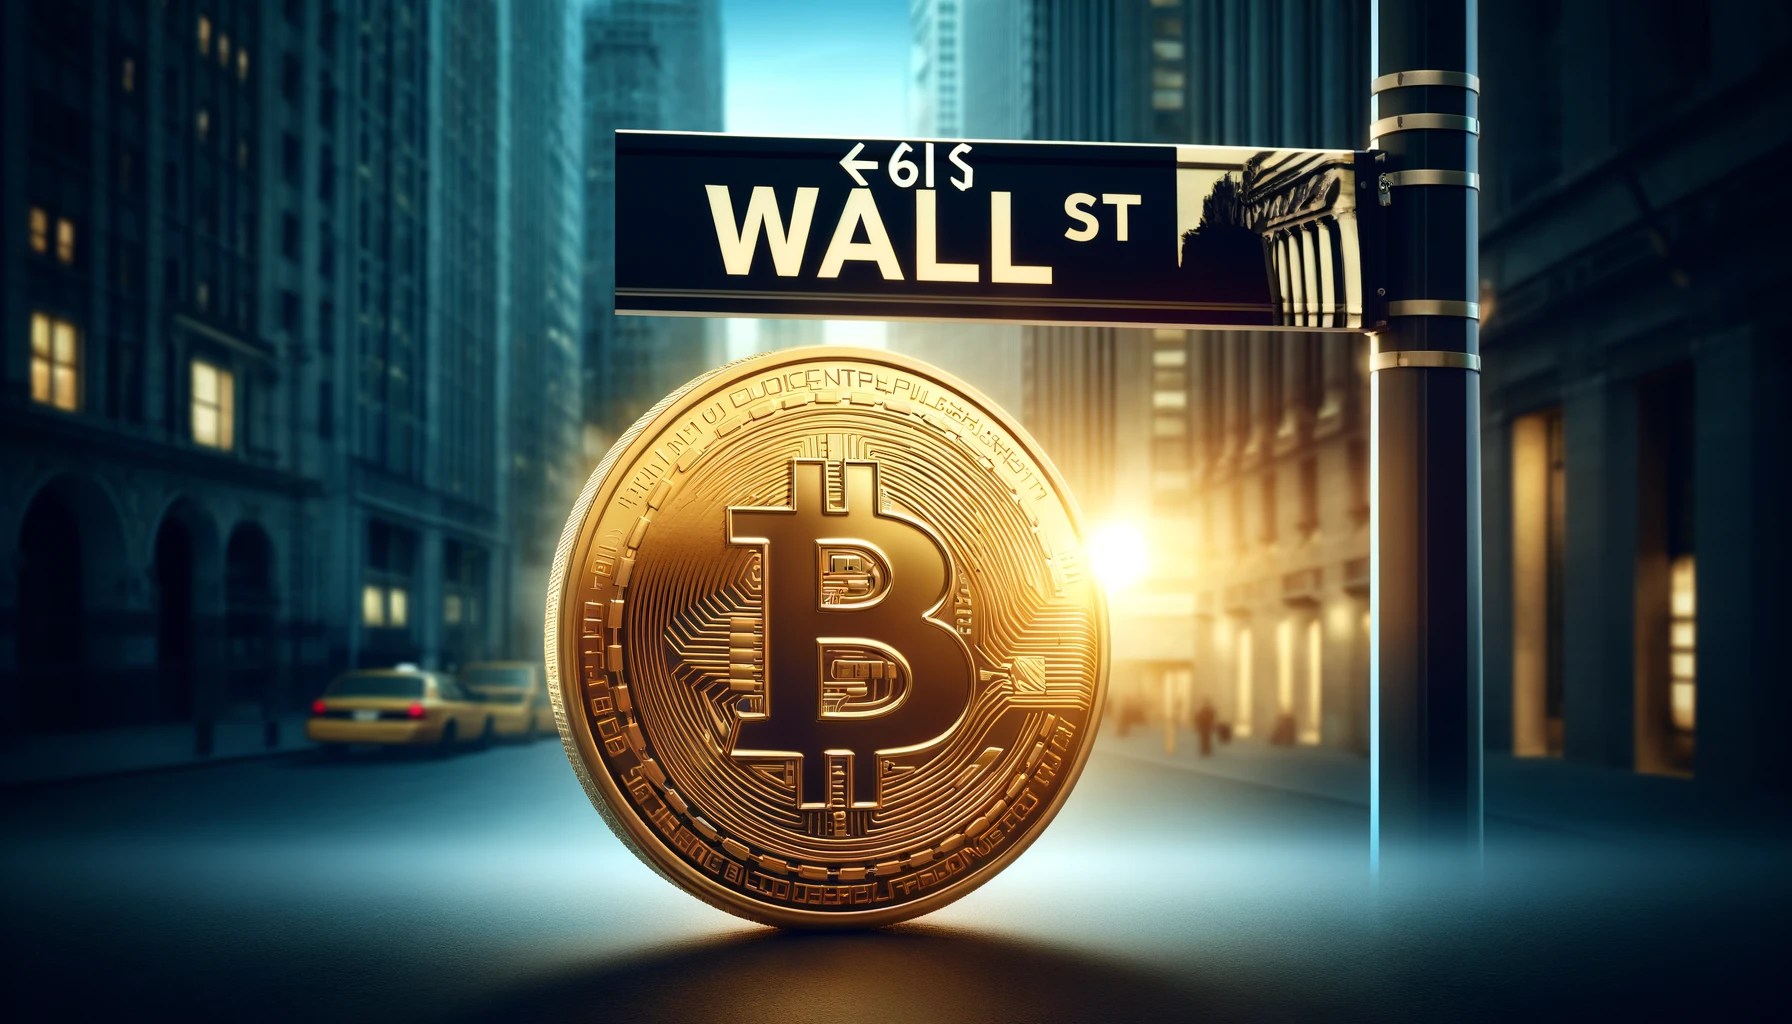 Wall Street US Banks Bitcoin ETFs